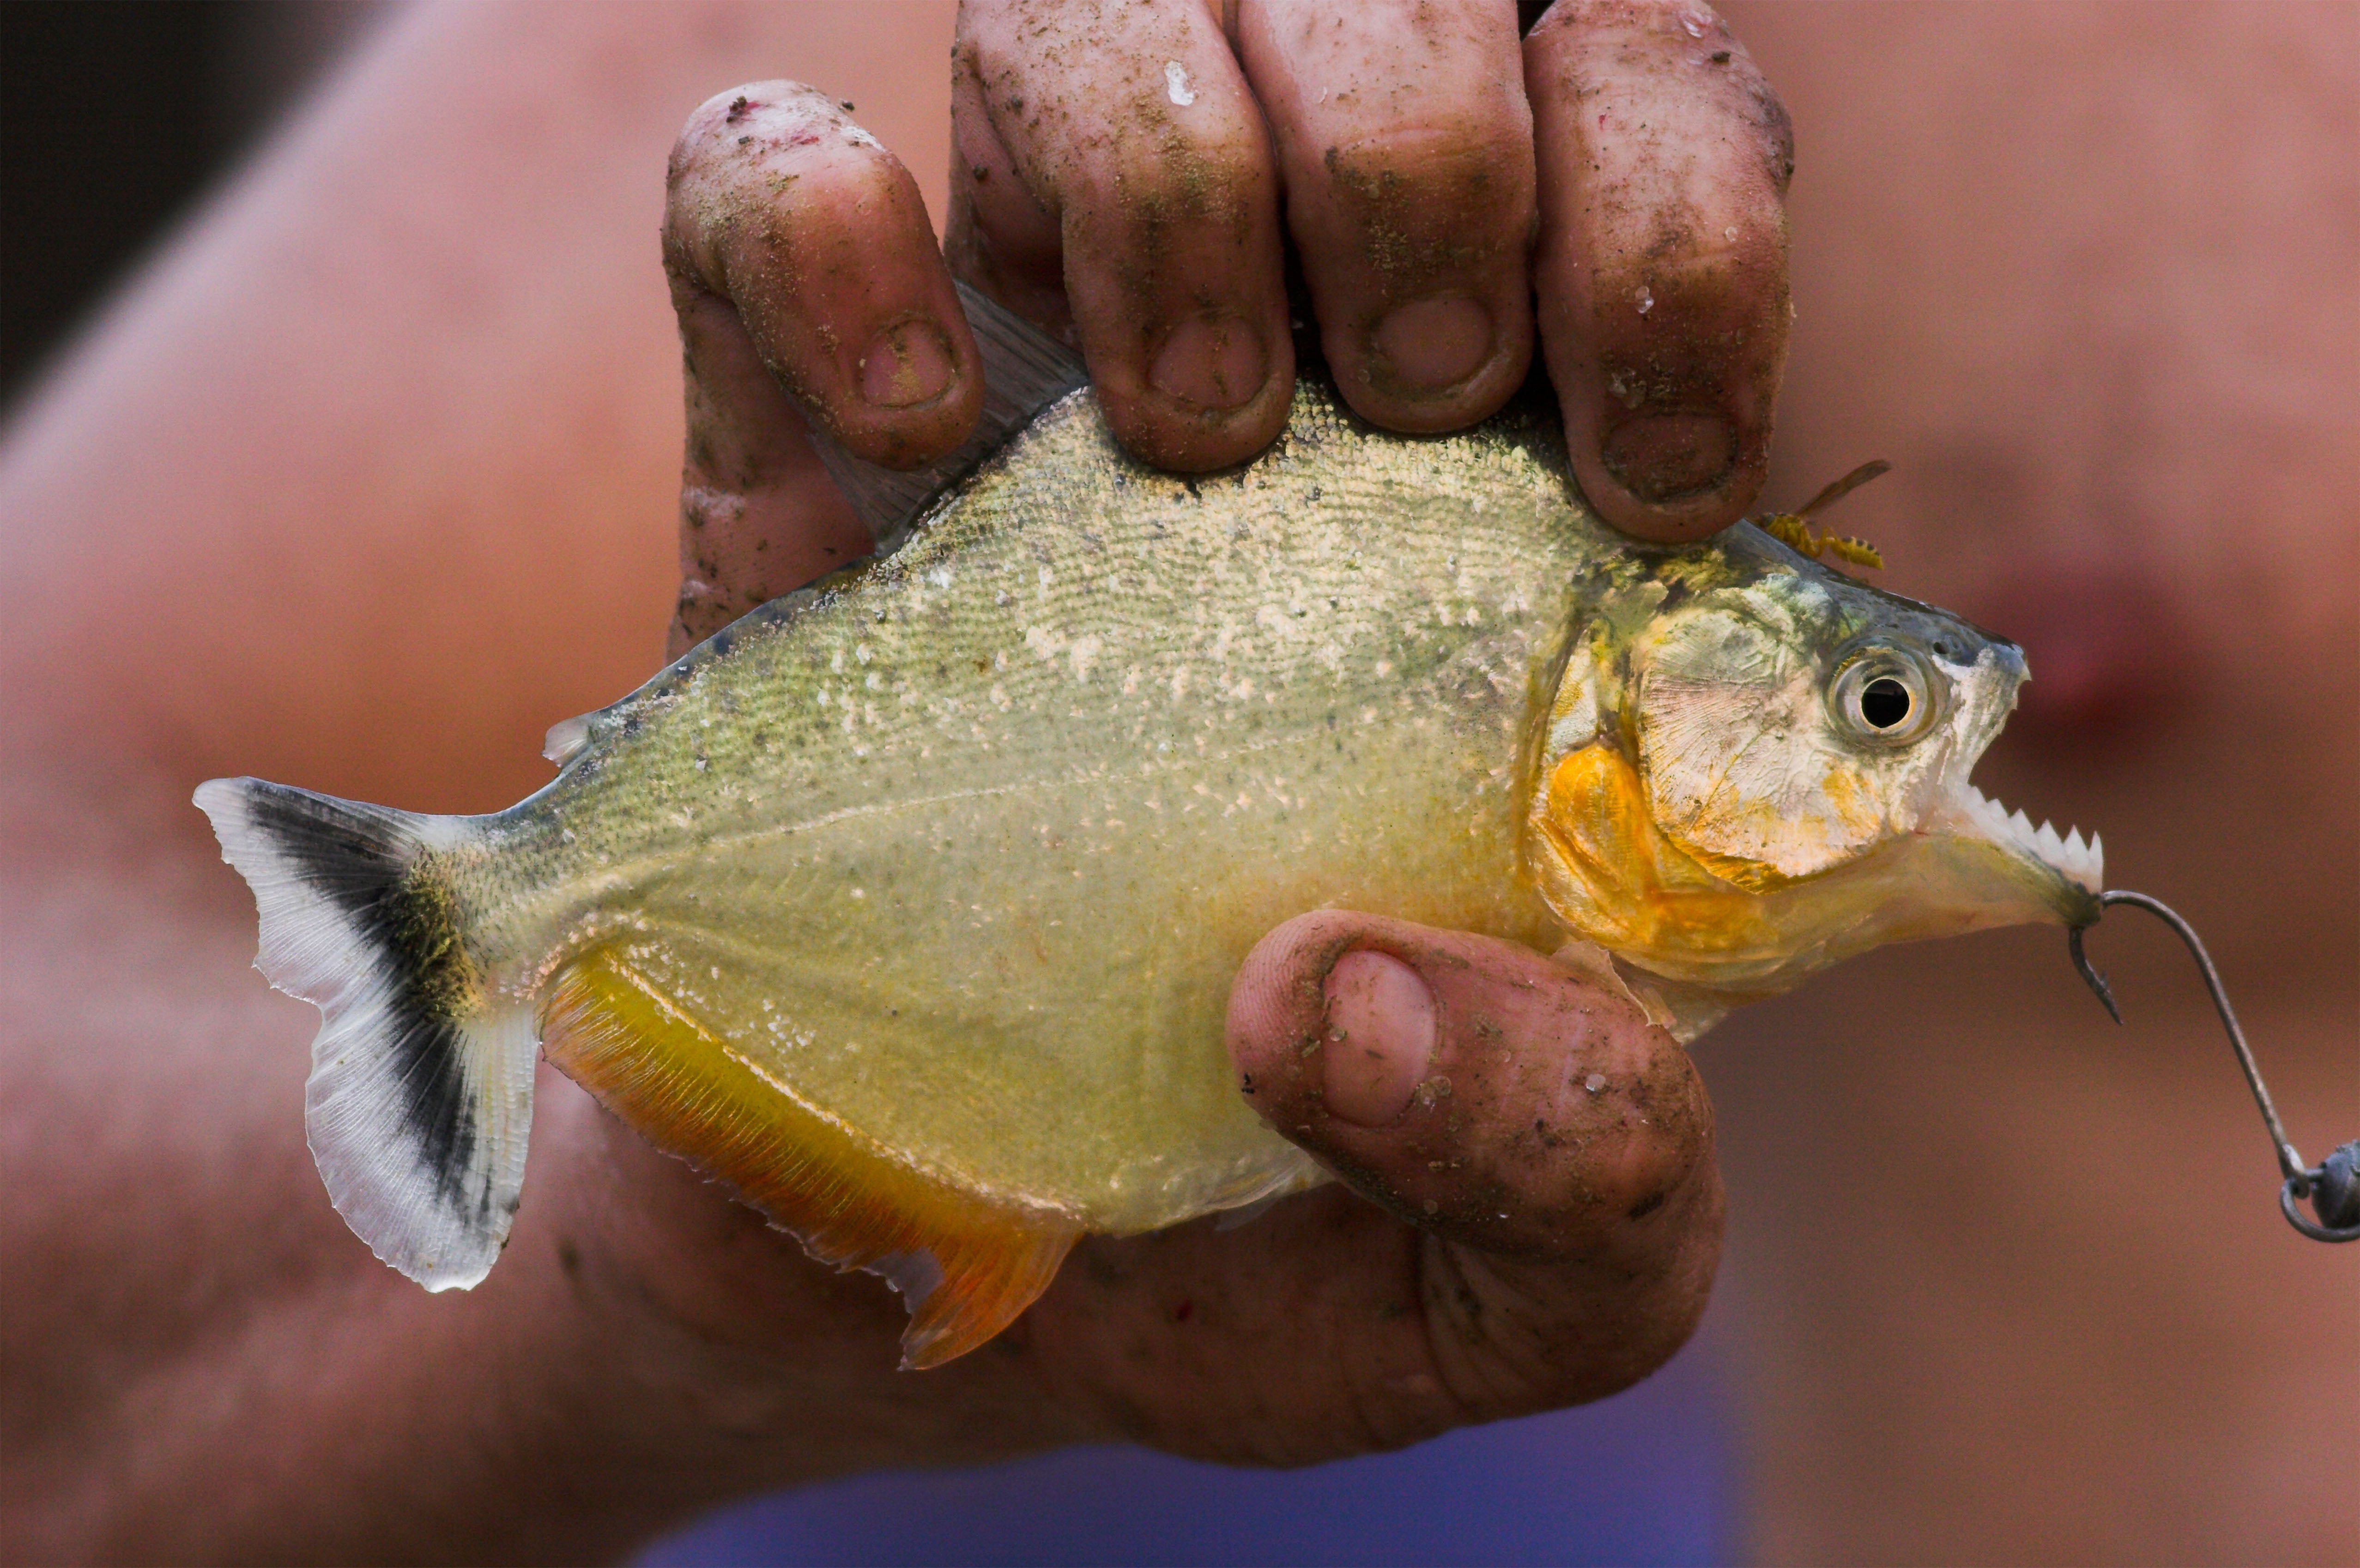 A white piranha held by a fisherman in Venezuela